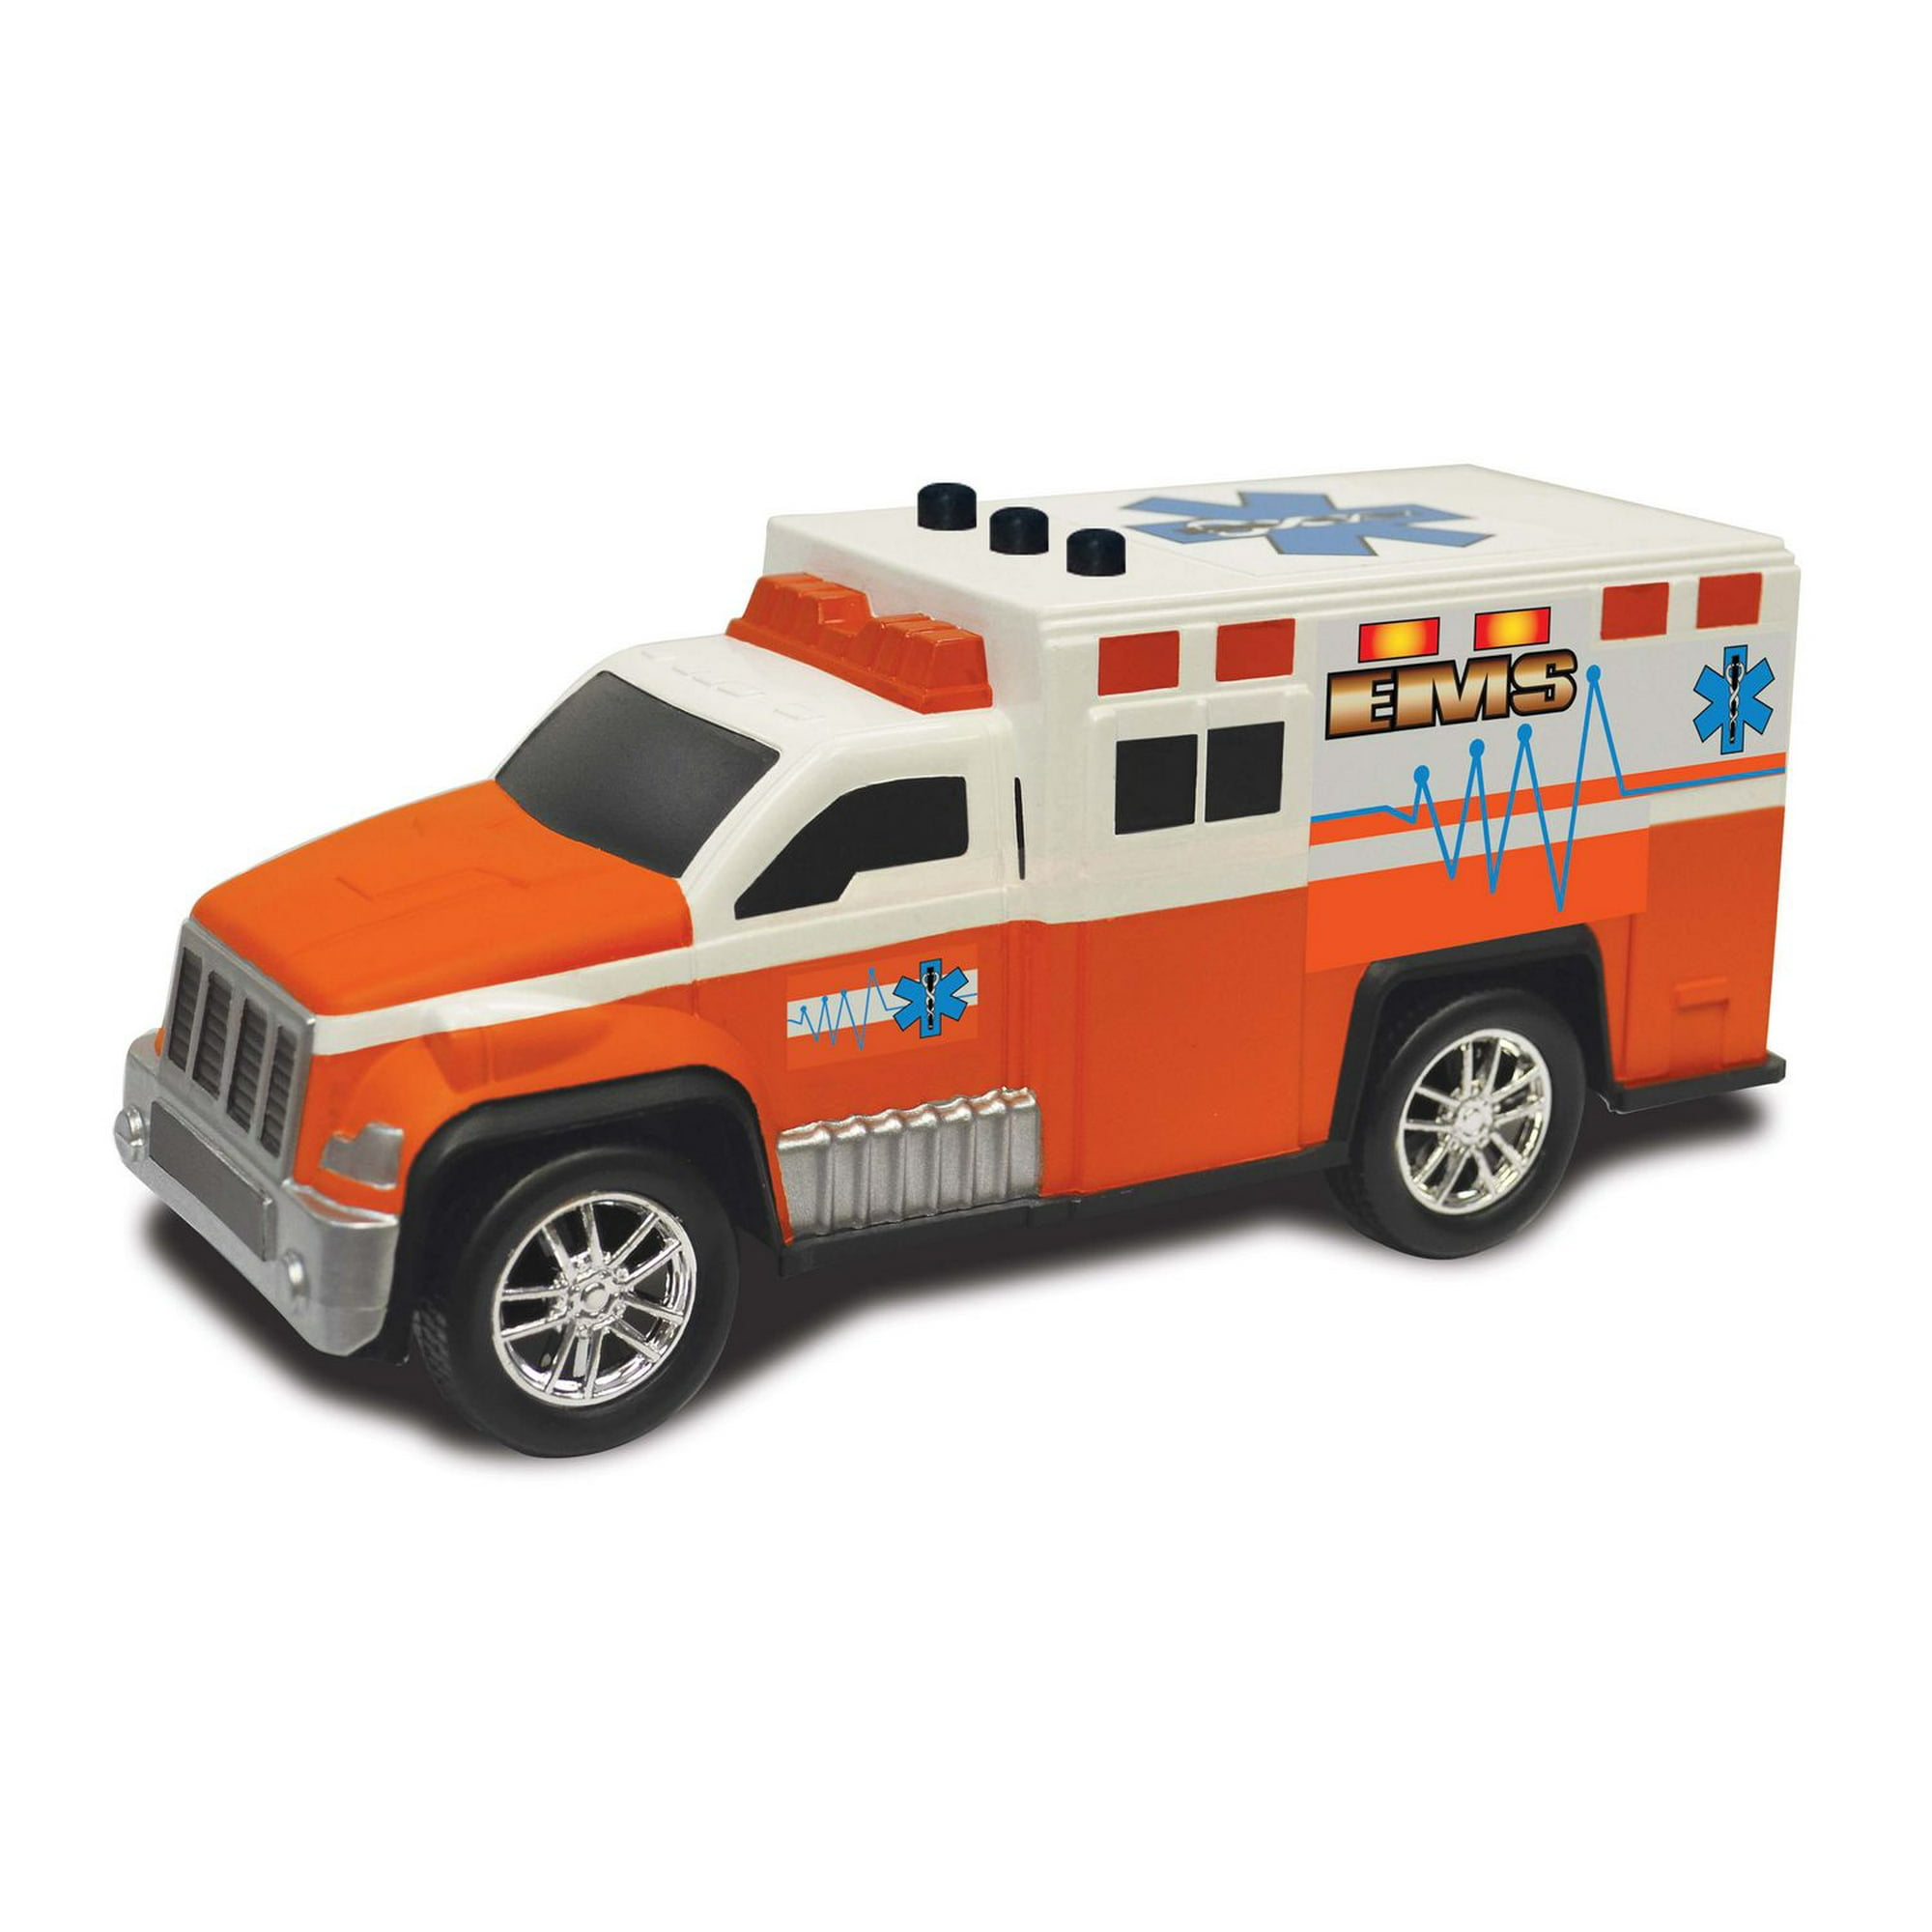 Jouet véhicule d'urgence Service de police de KidCoMD 